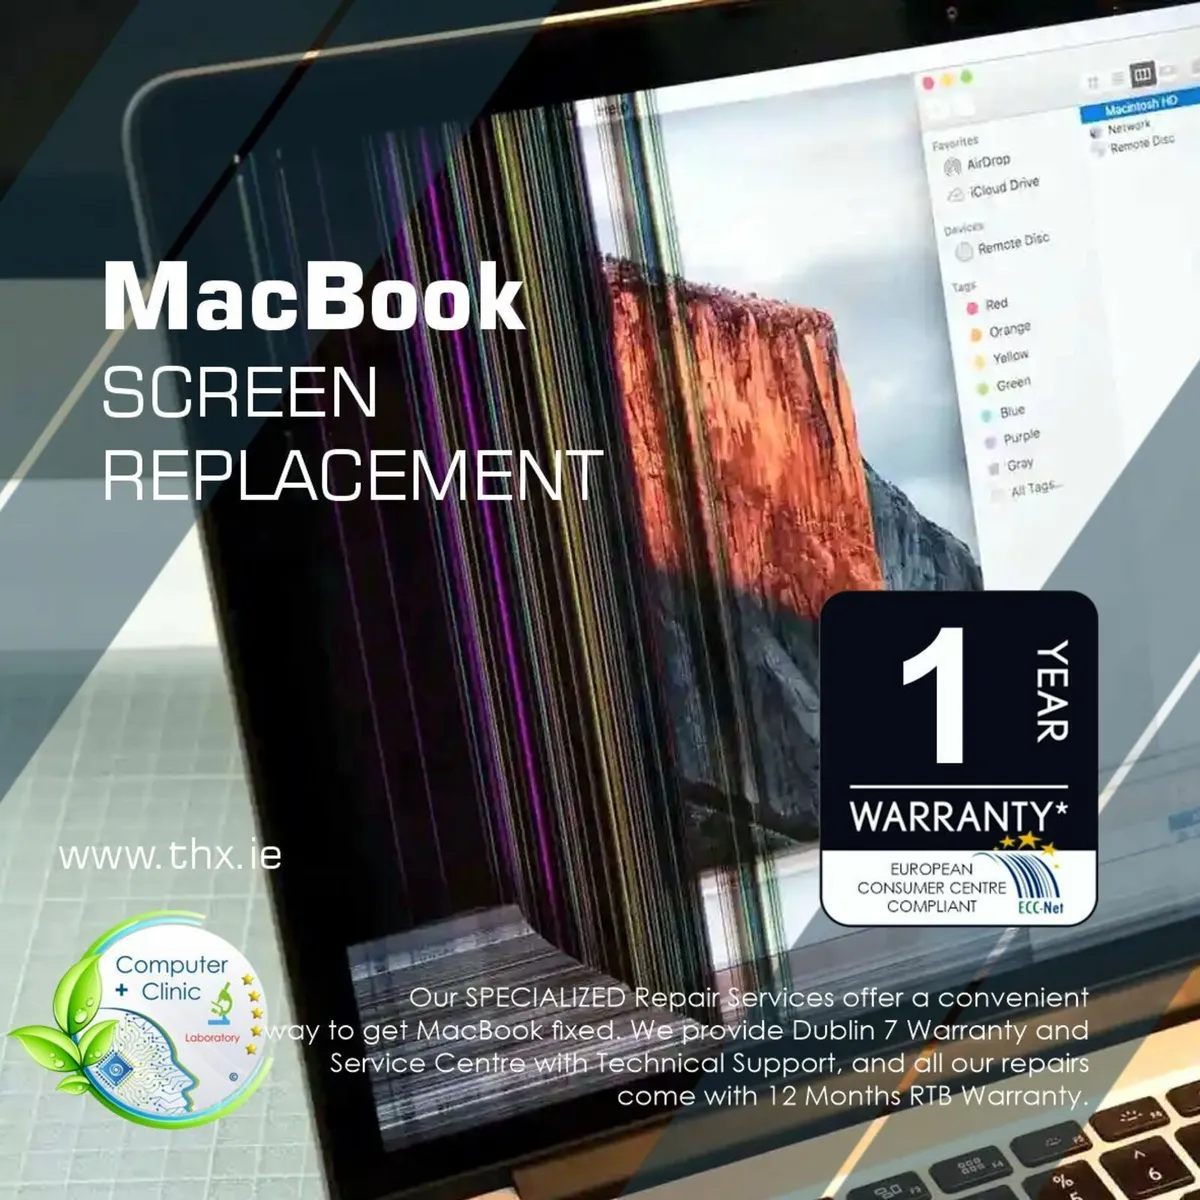 MacBook Repairs》FREE ASSESSMENT & 1 YEAR WARRANTY - Image 2